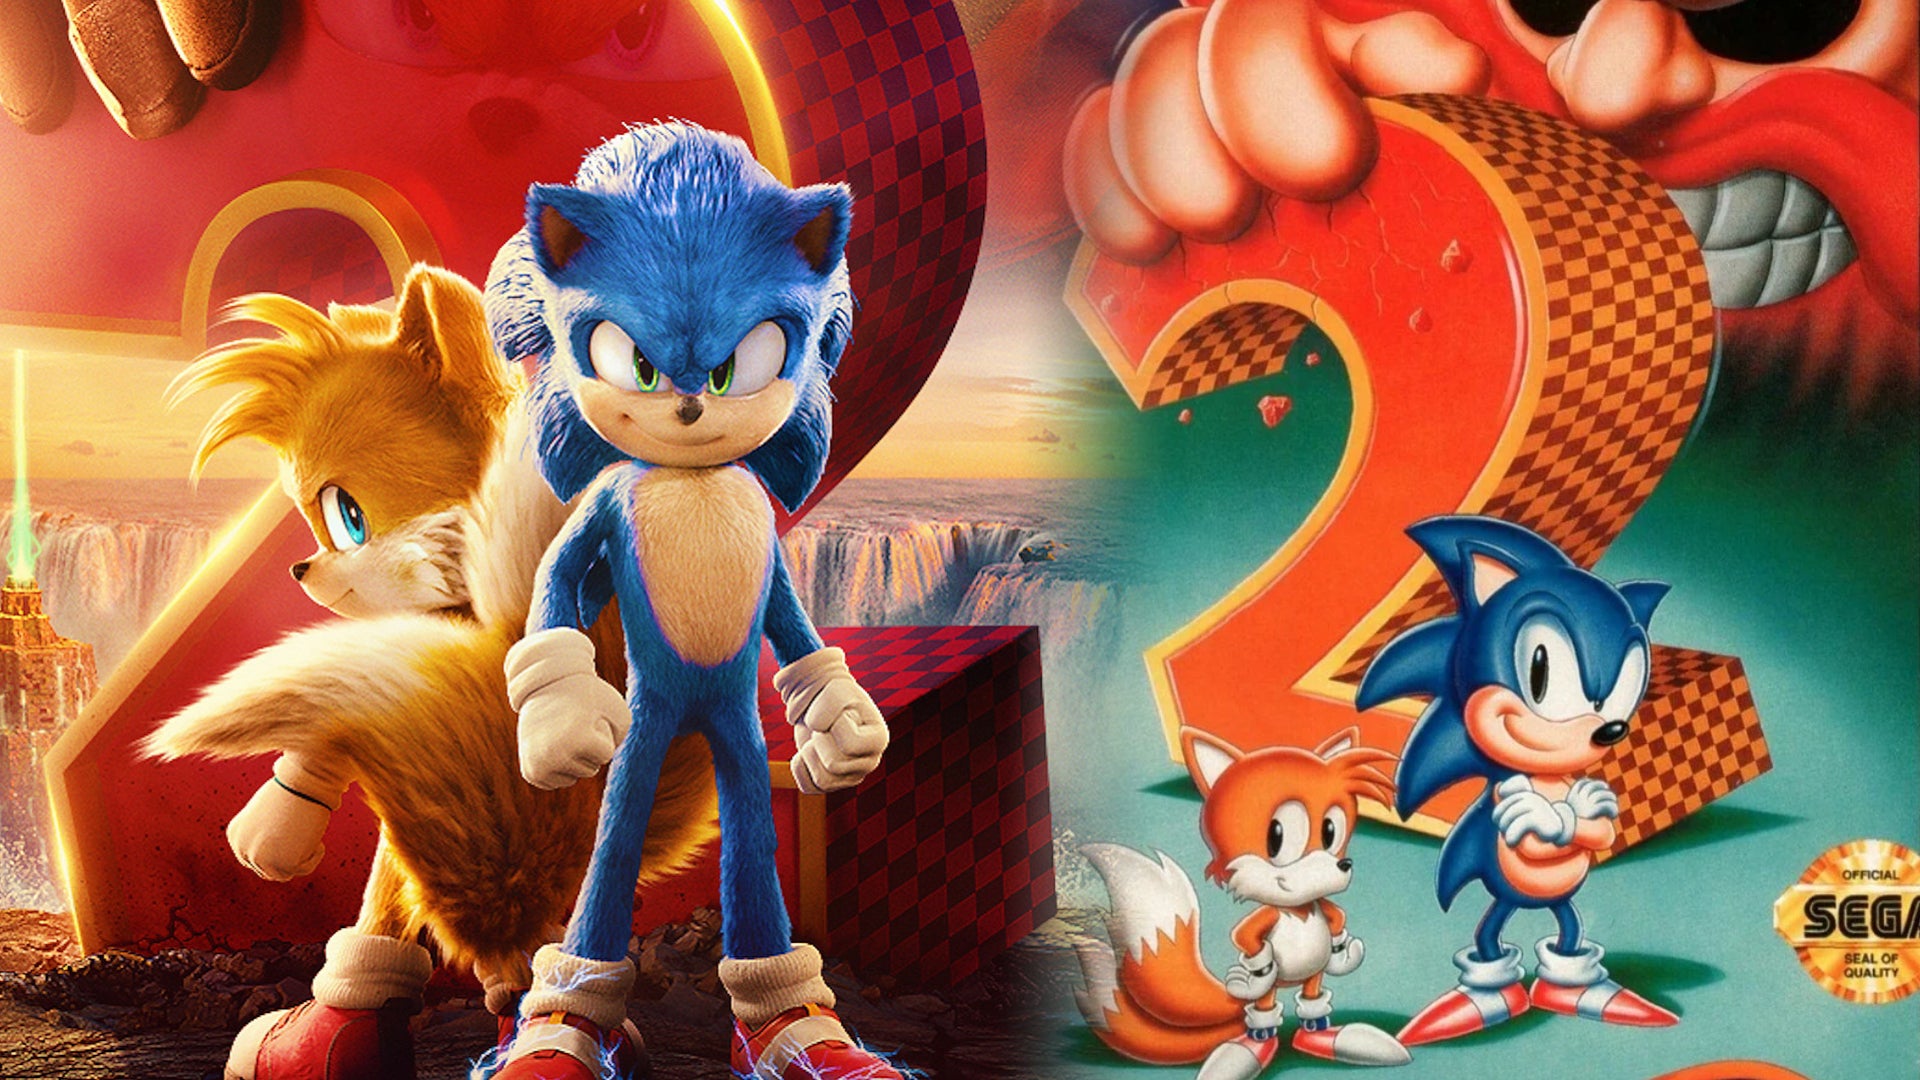 Amazing Sonic the Hedgehog 2 movie poster goes hard on Mega Drive nostalgia VG247